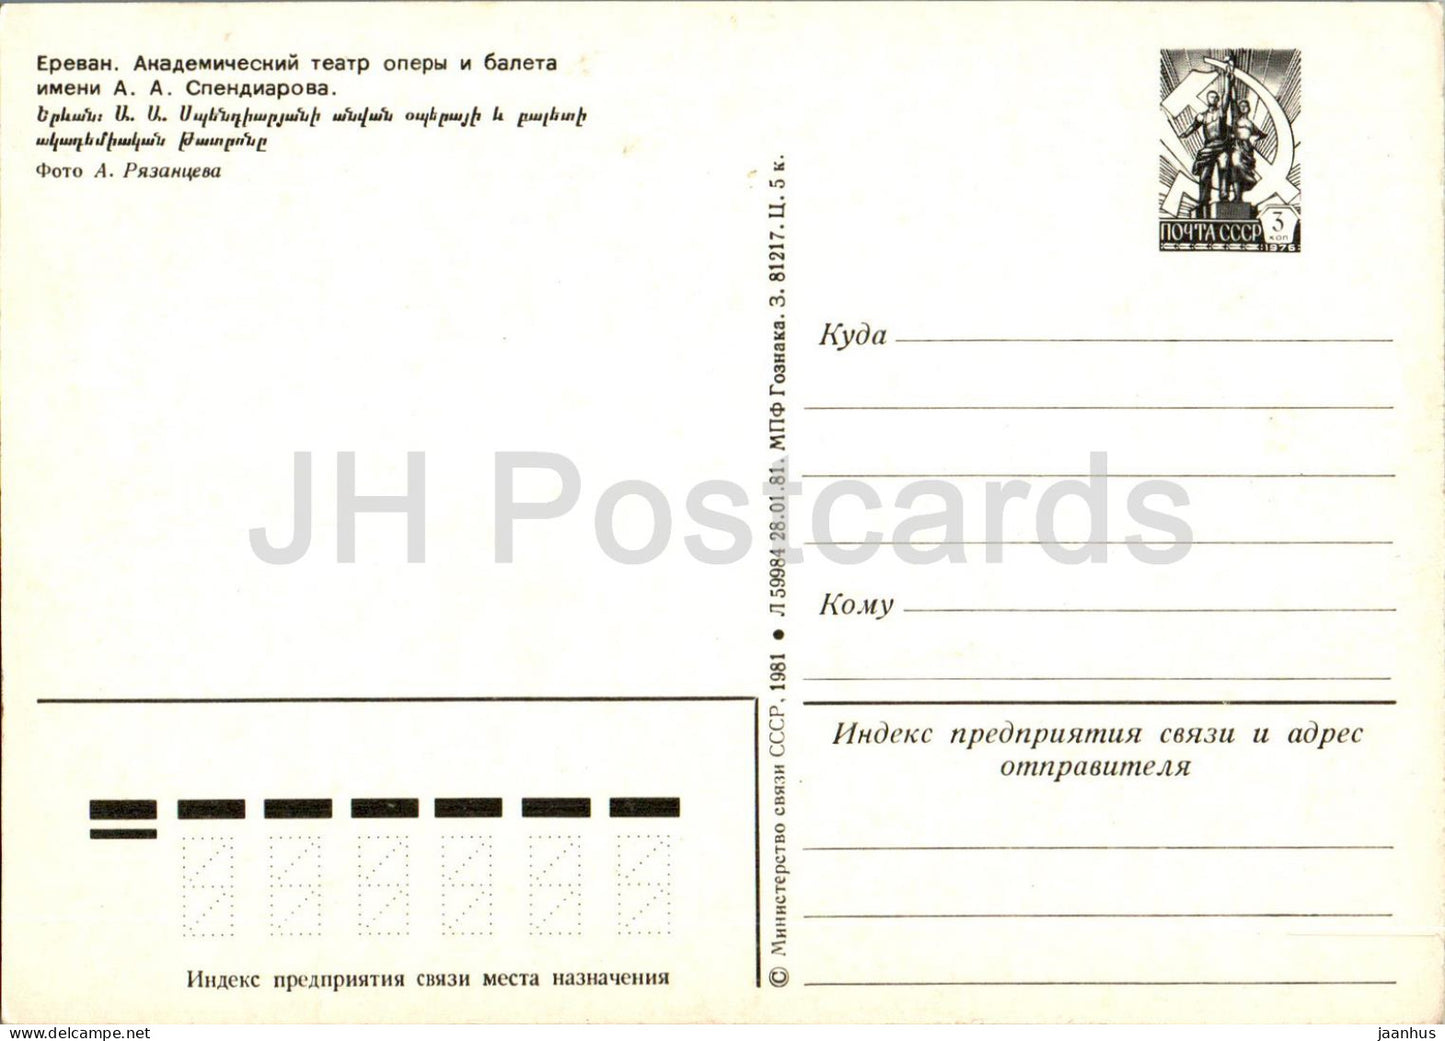 Yerevan - Spendiaryan Opera and Ballet Theatre - postal stationery - 1981 - Armenia USSR - unused